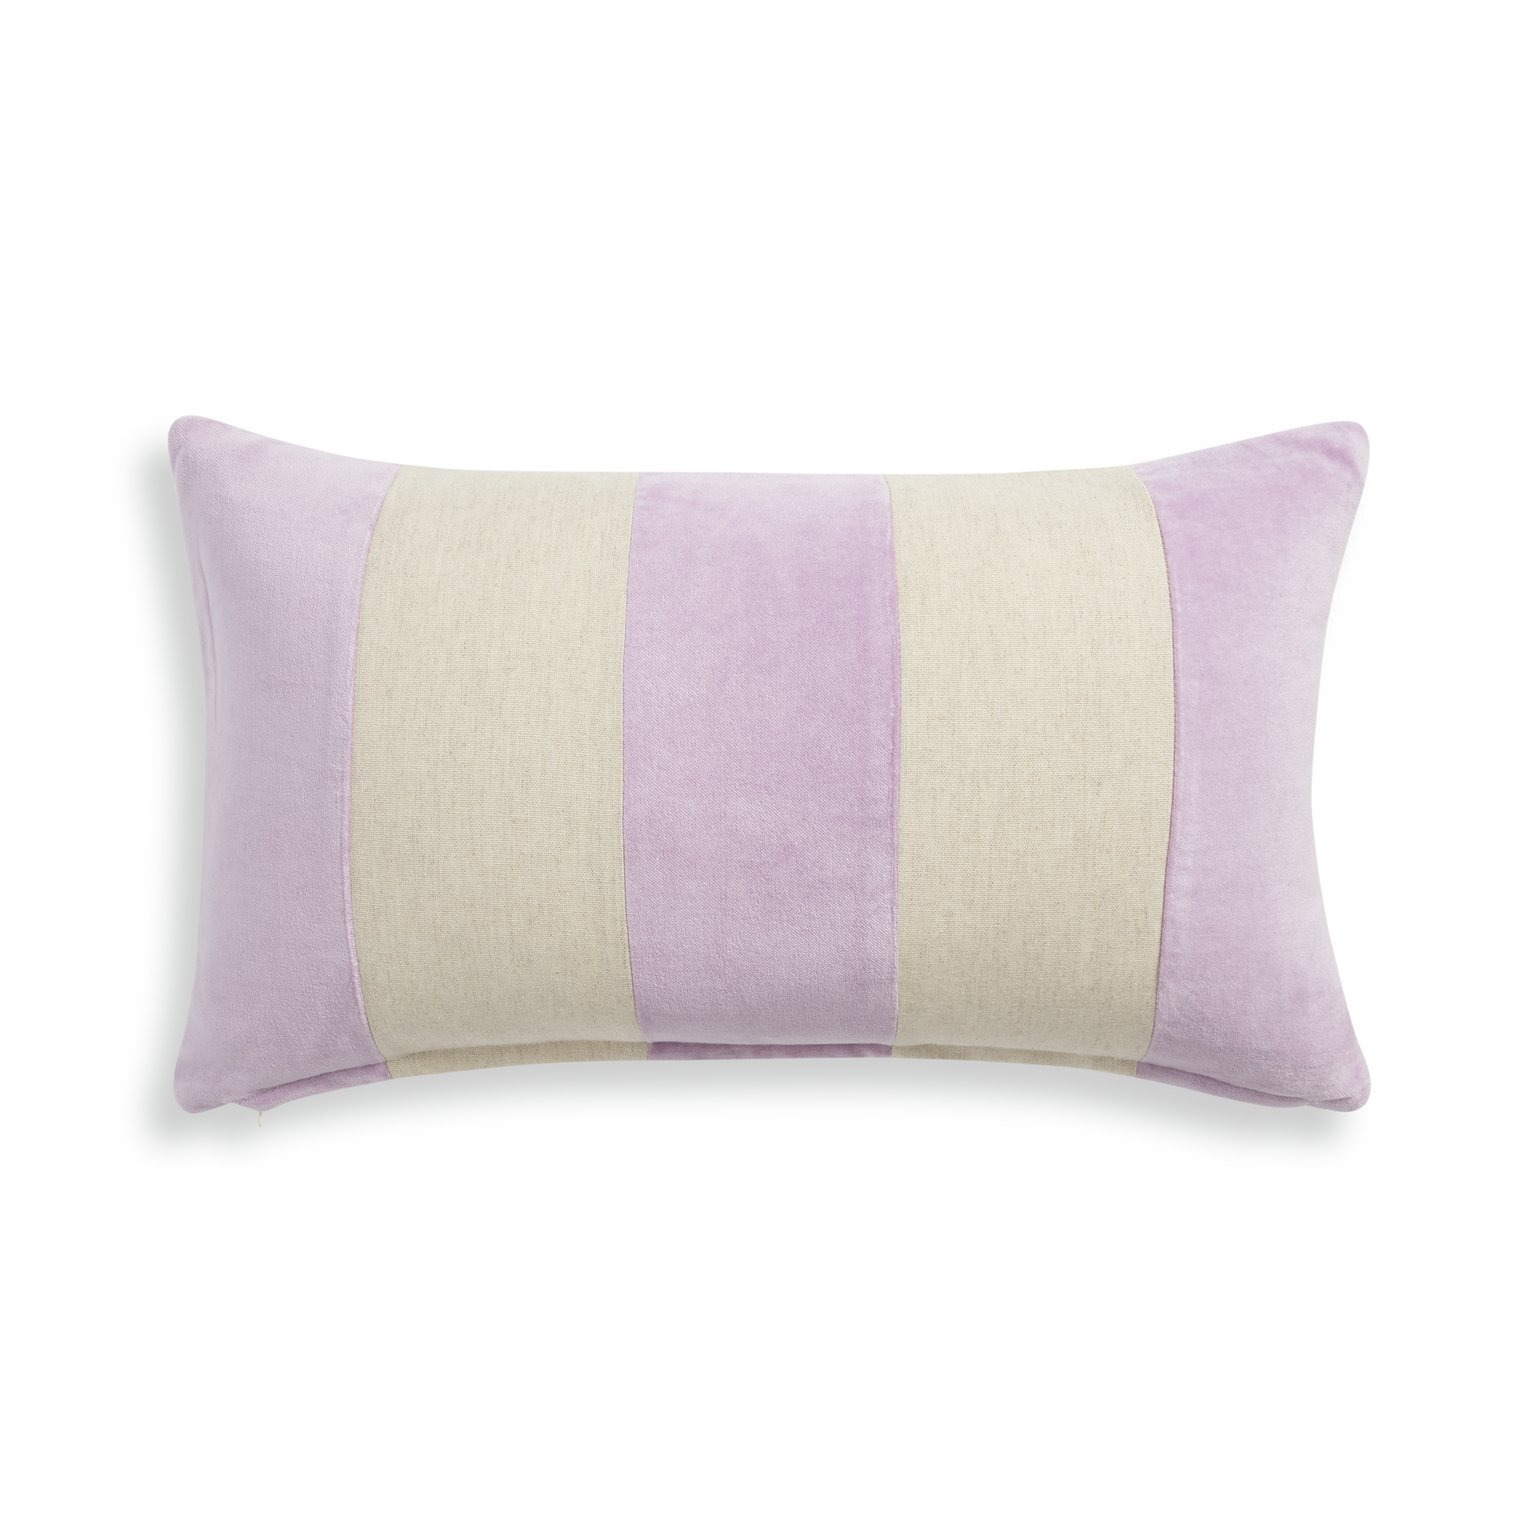 Habitat Velvet Striped Cushion - Lilac & Cream - 30x50cm - image 1